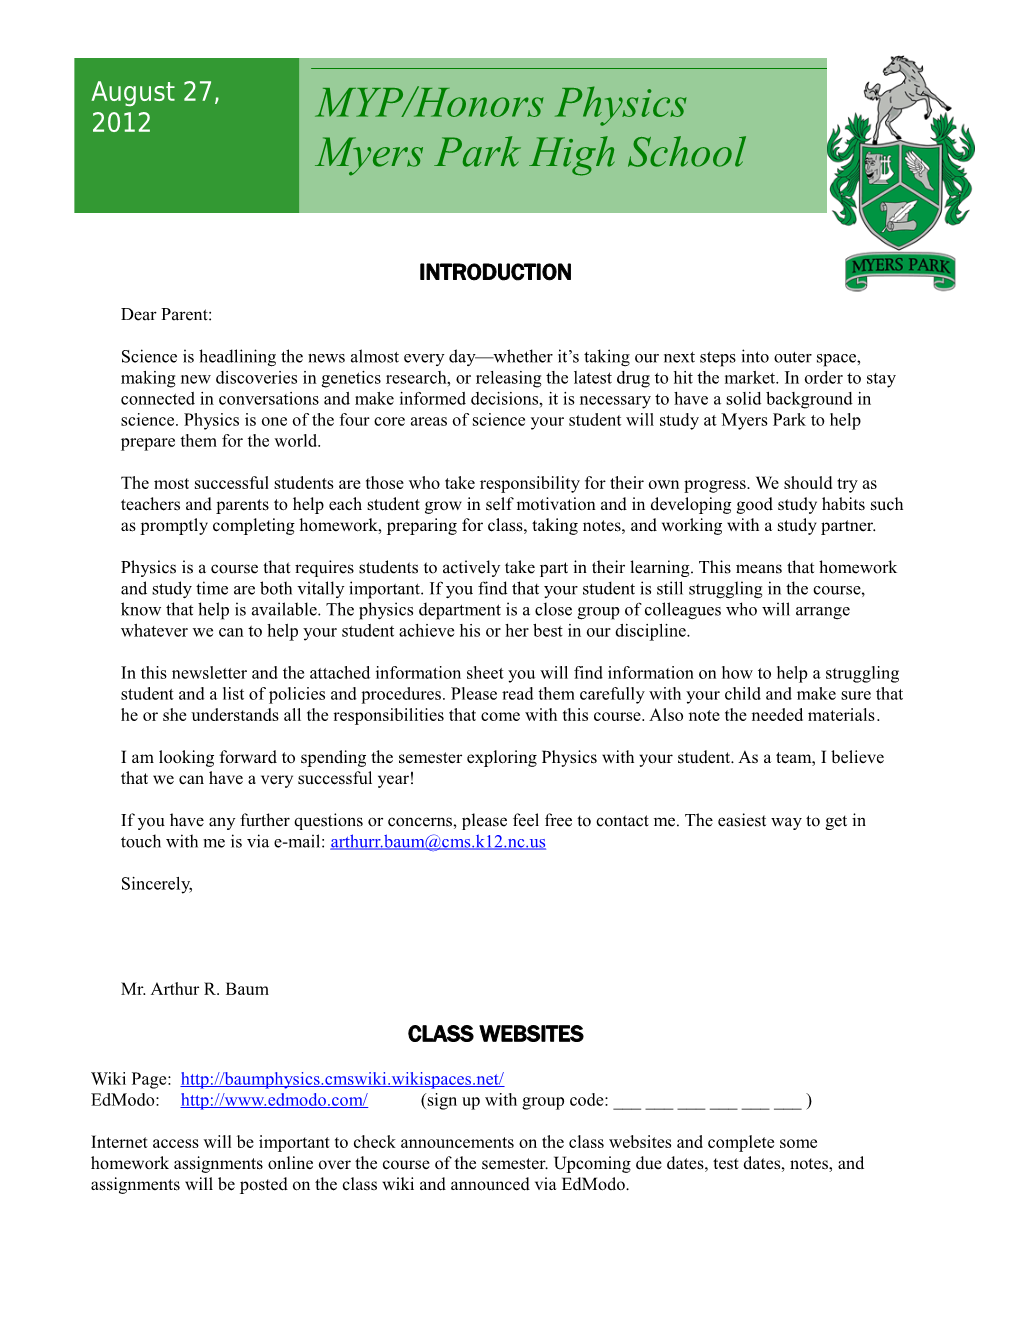 MYP / Honors Physics Parent Letter